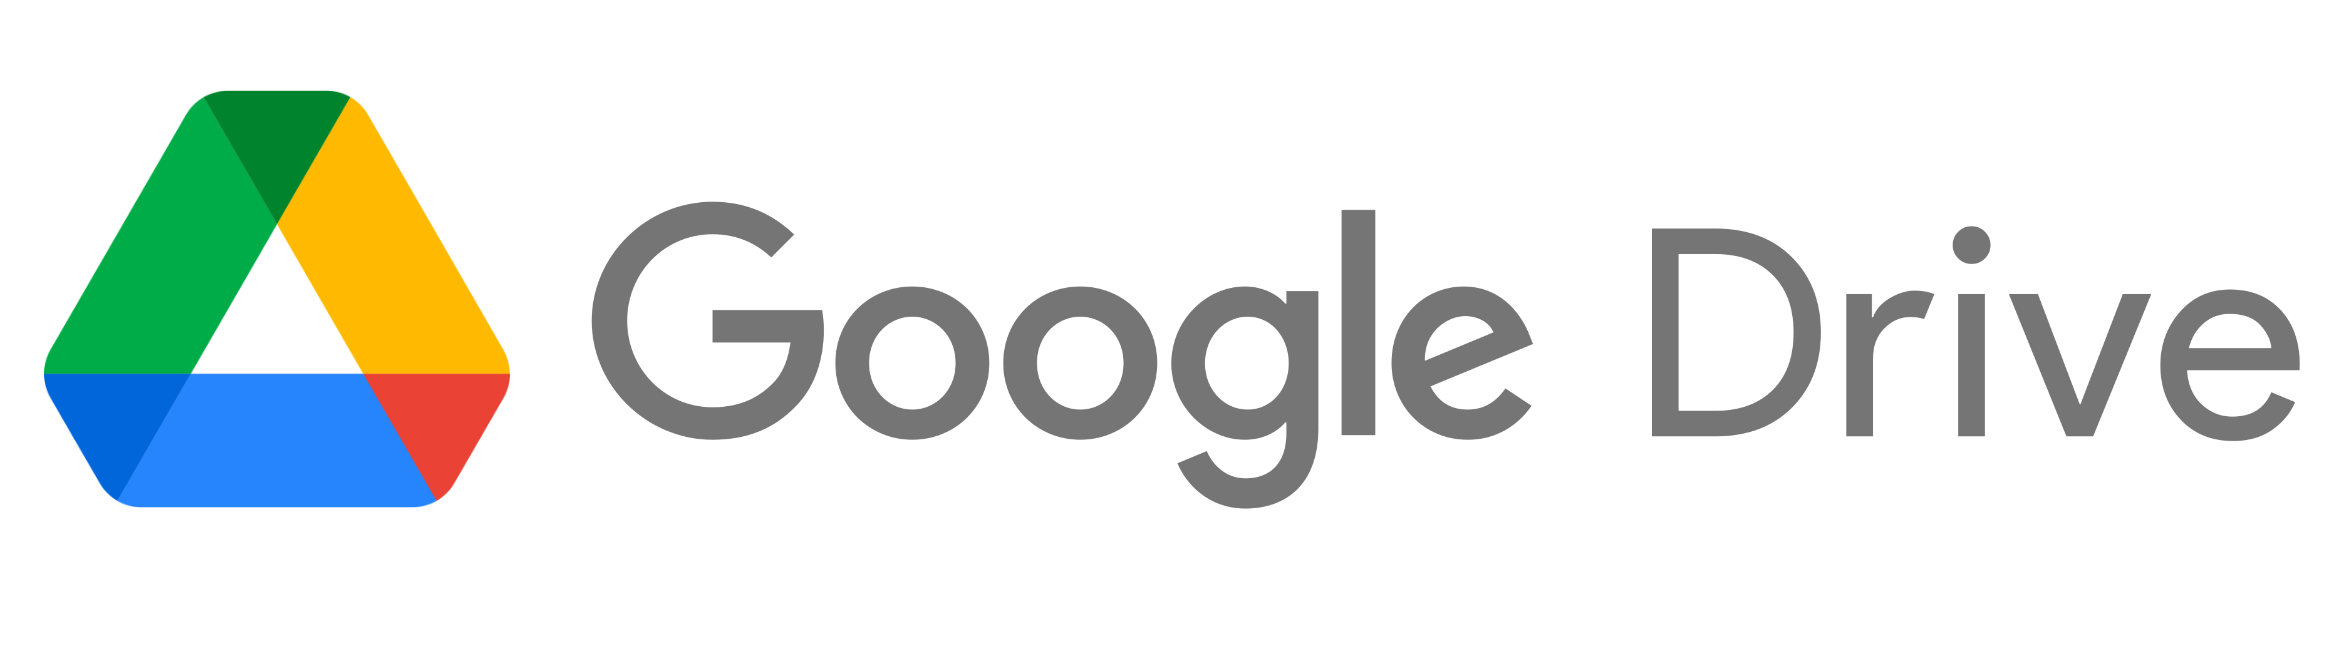 Google_Drive_text_logo_grey.png